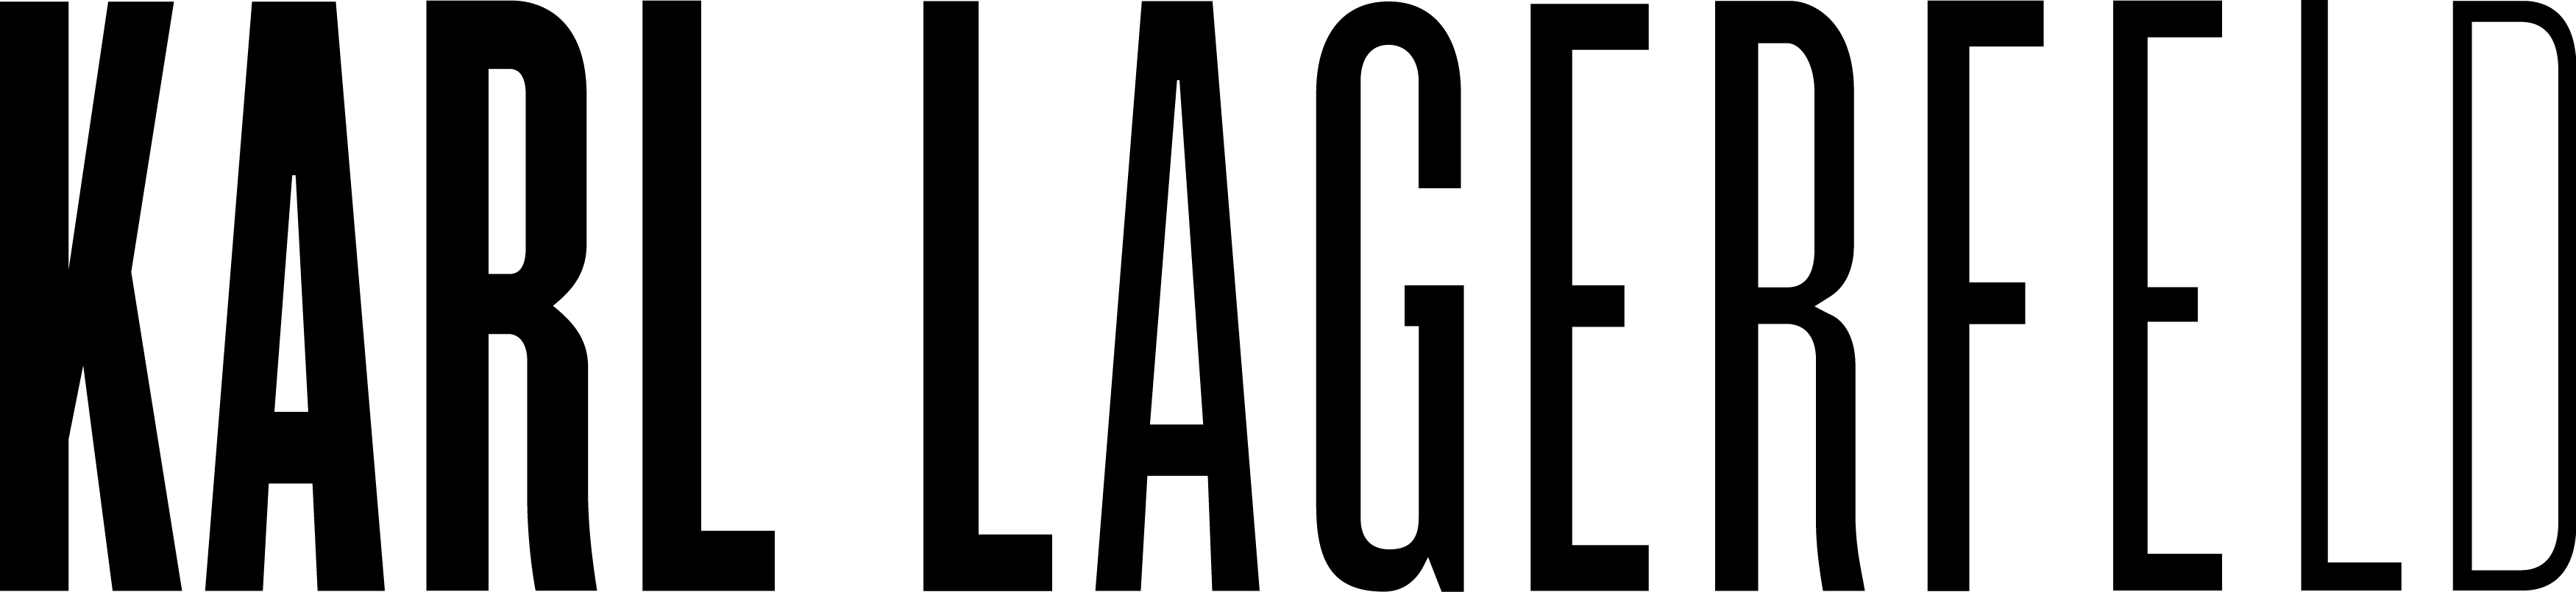 Karl Lagerfeld logo